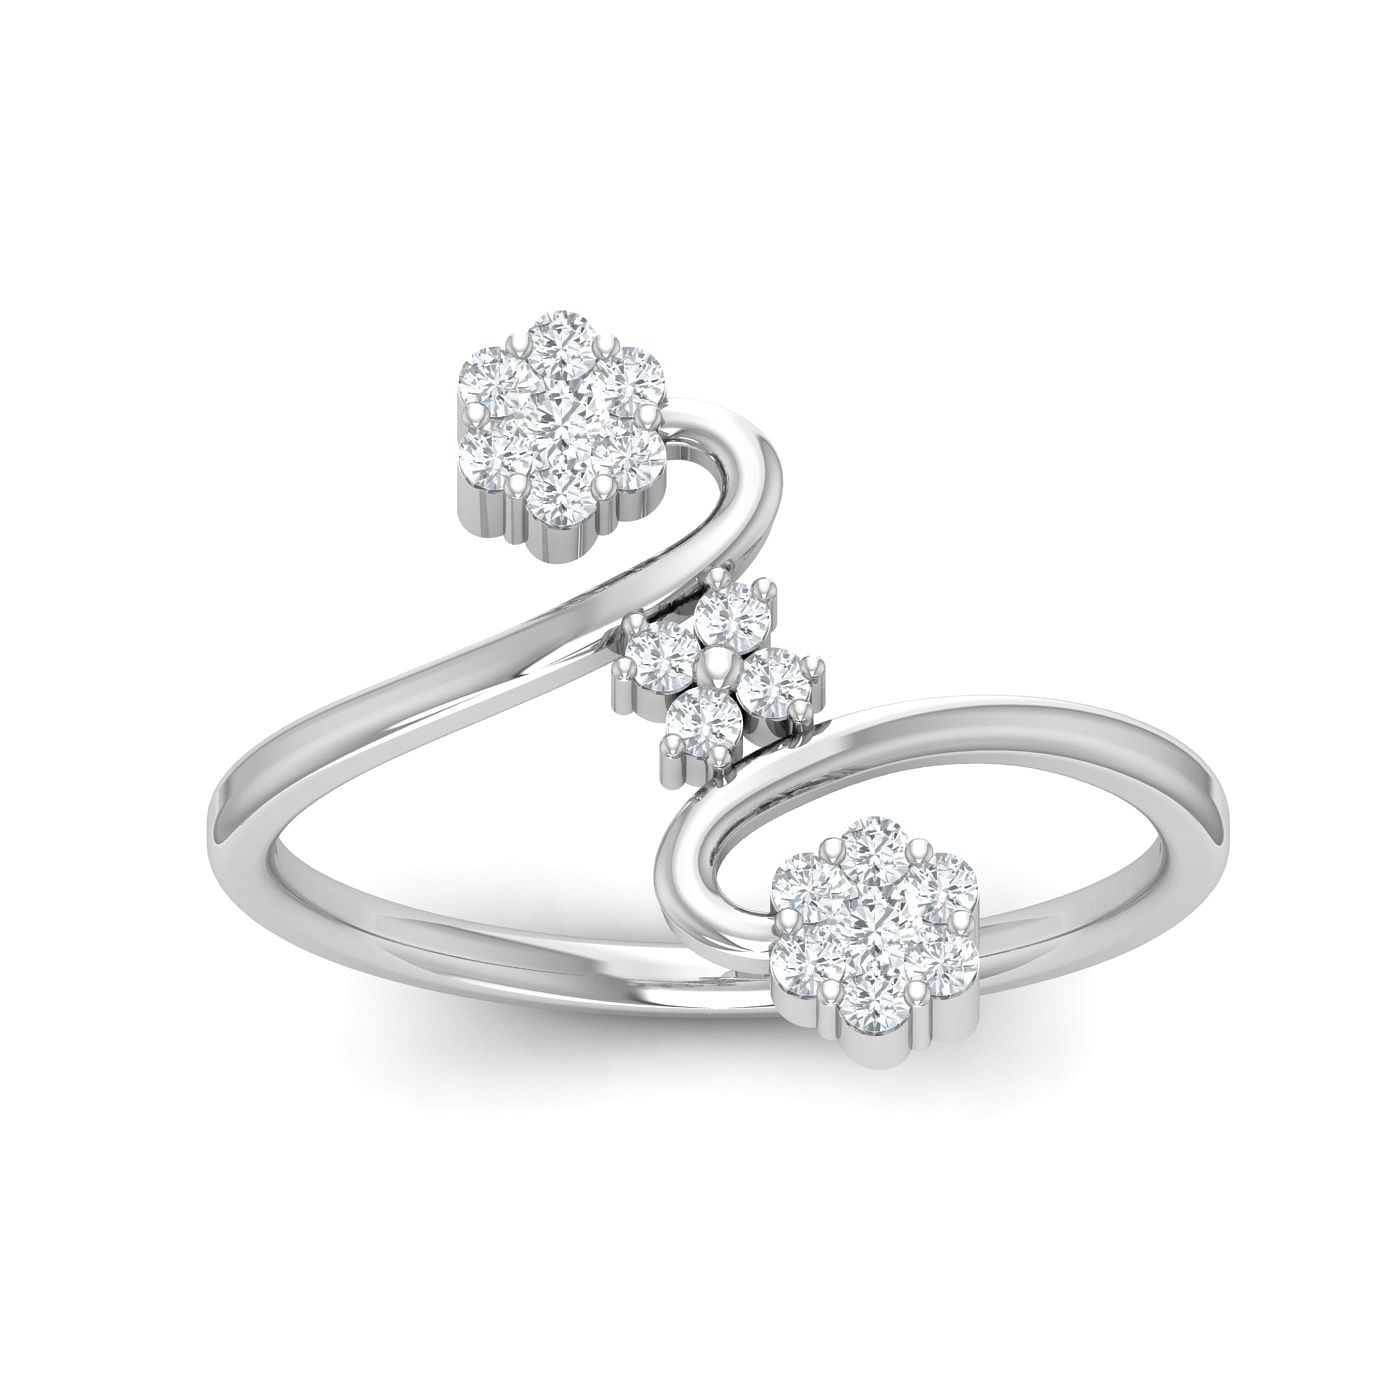 Three Flower Design Diamond Ring With White Gold